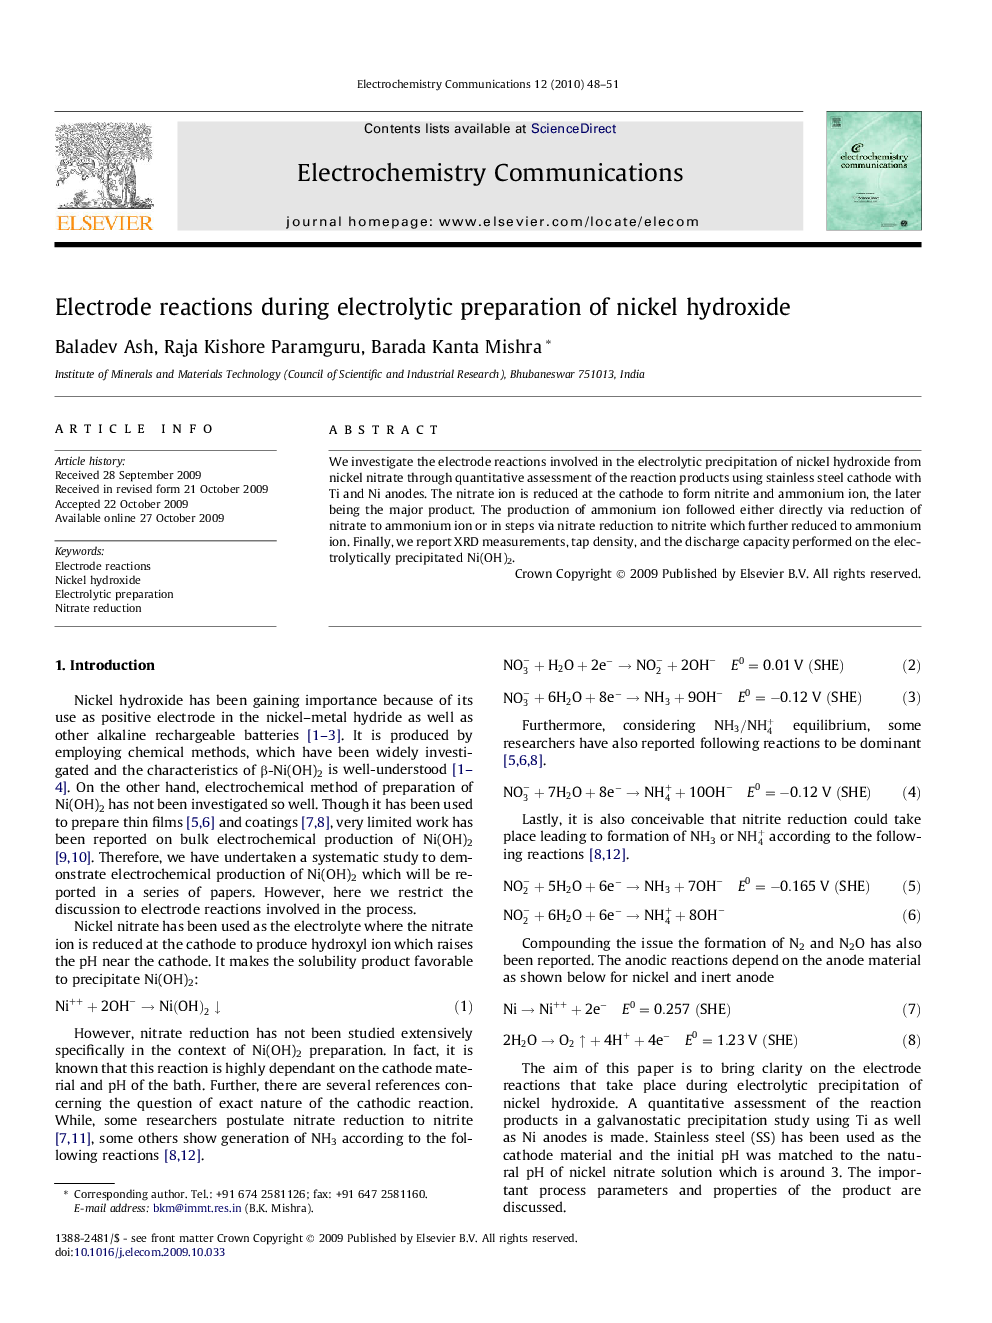 Electrode reactions during electrolytic preparation of nickel hydroxide